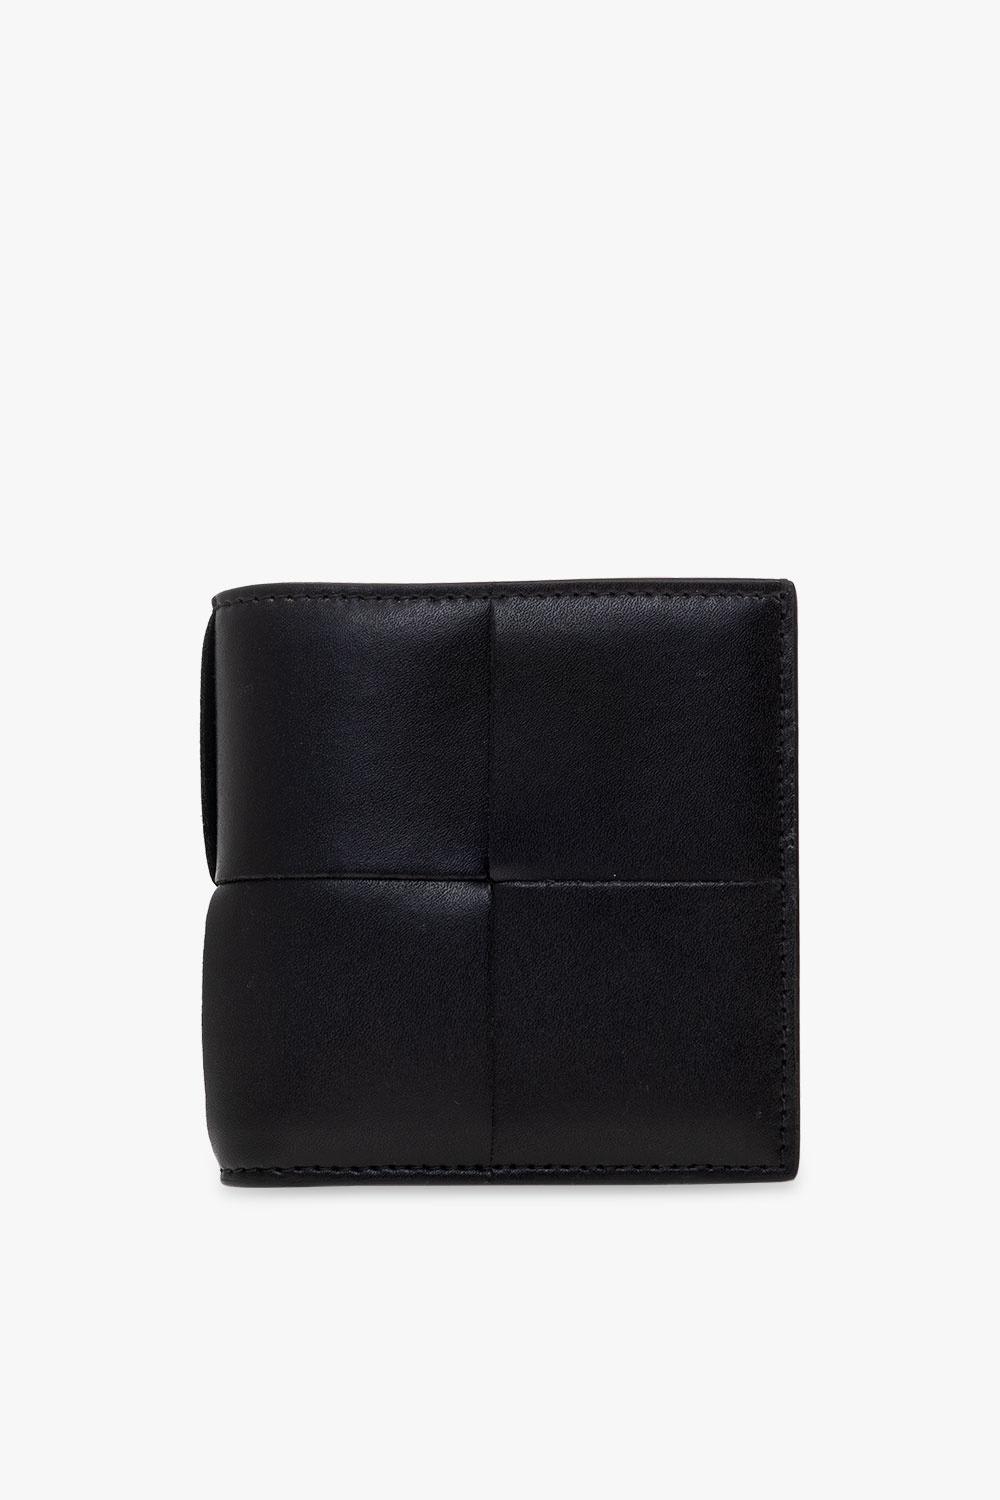 Bottega Veneta Leather Folding Wallet In Black